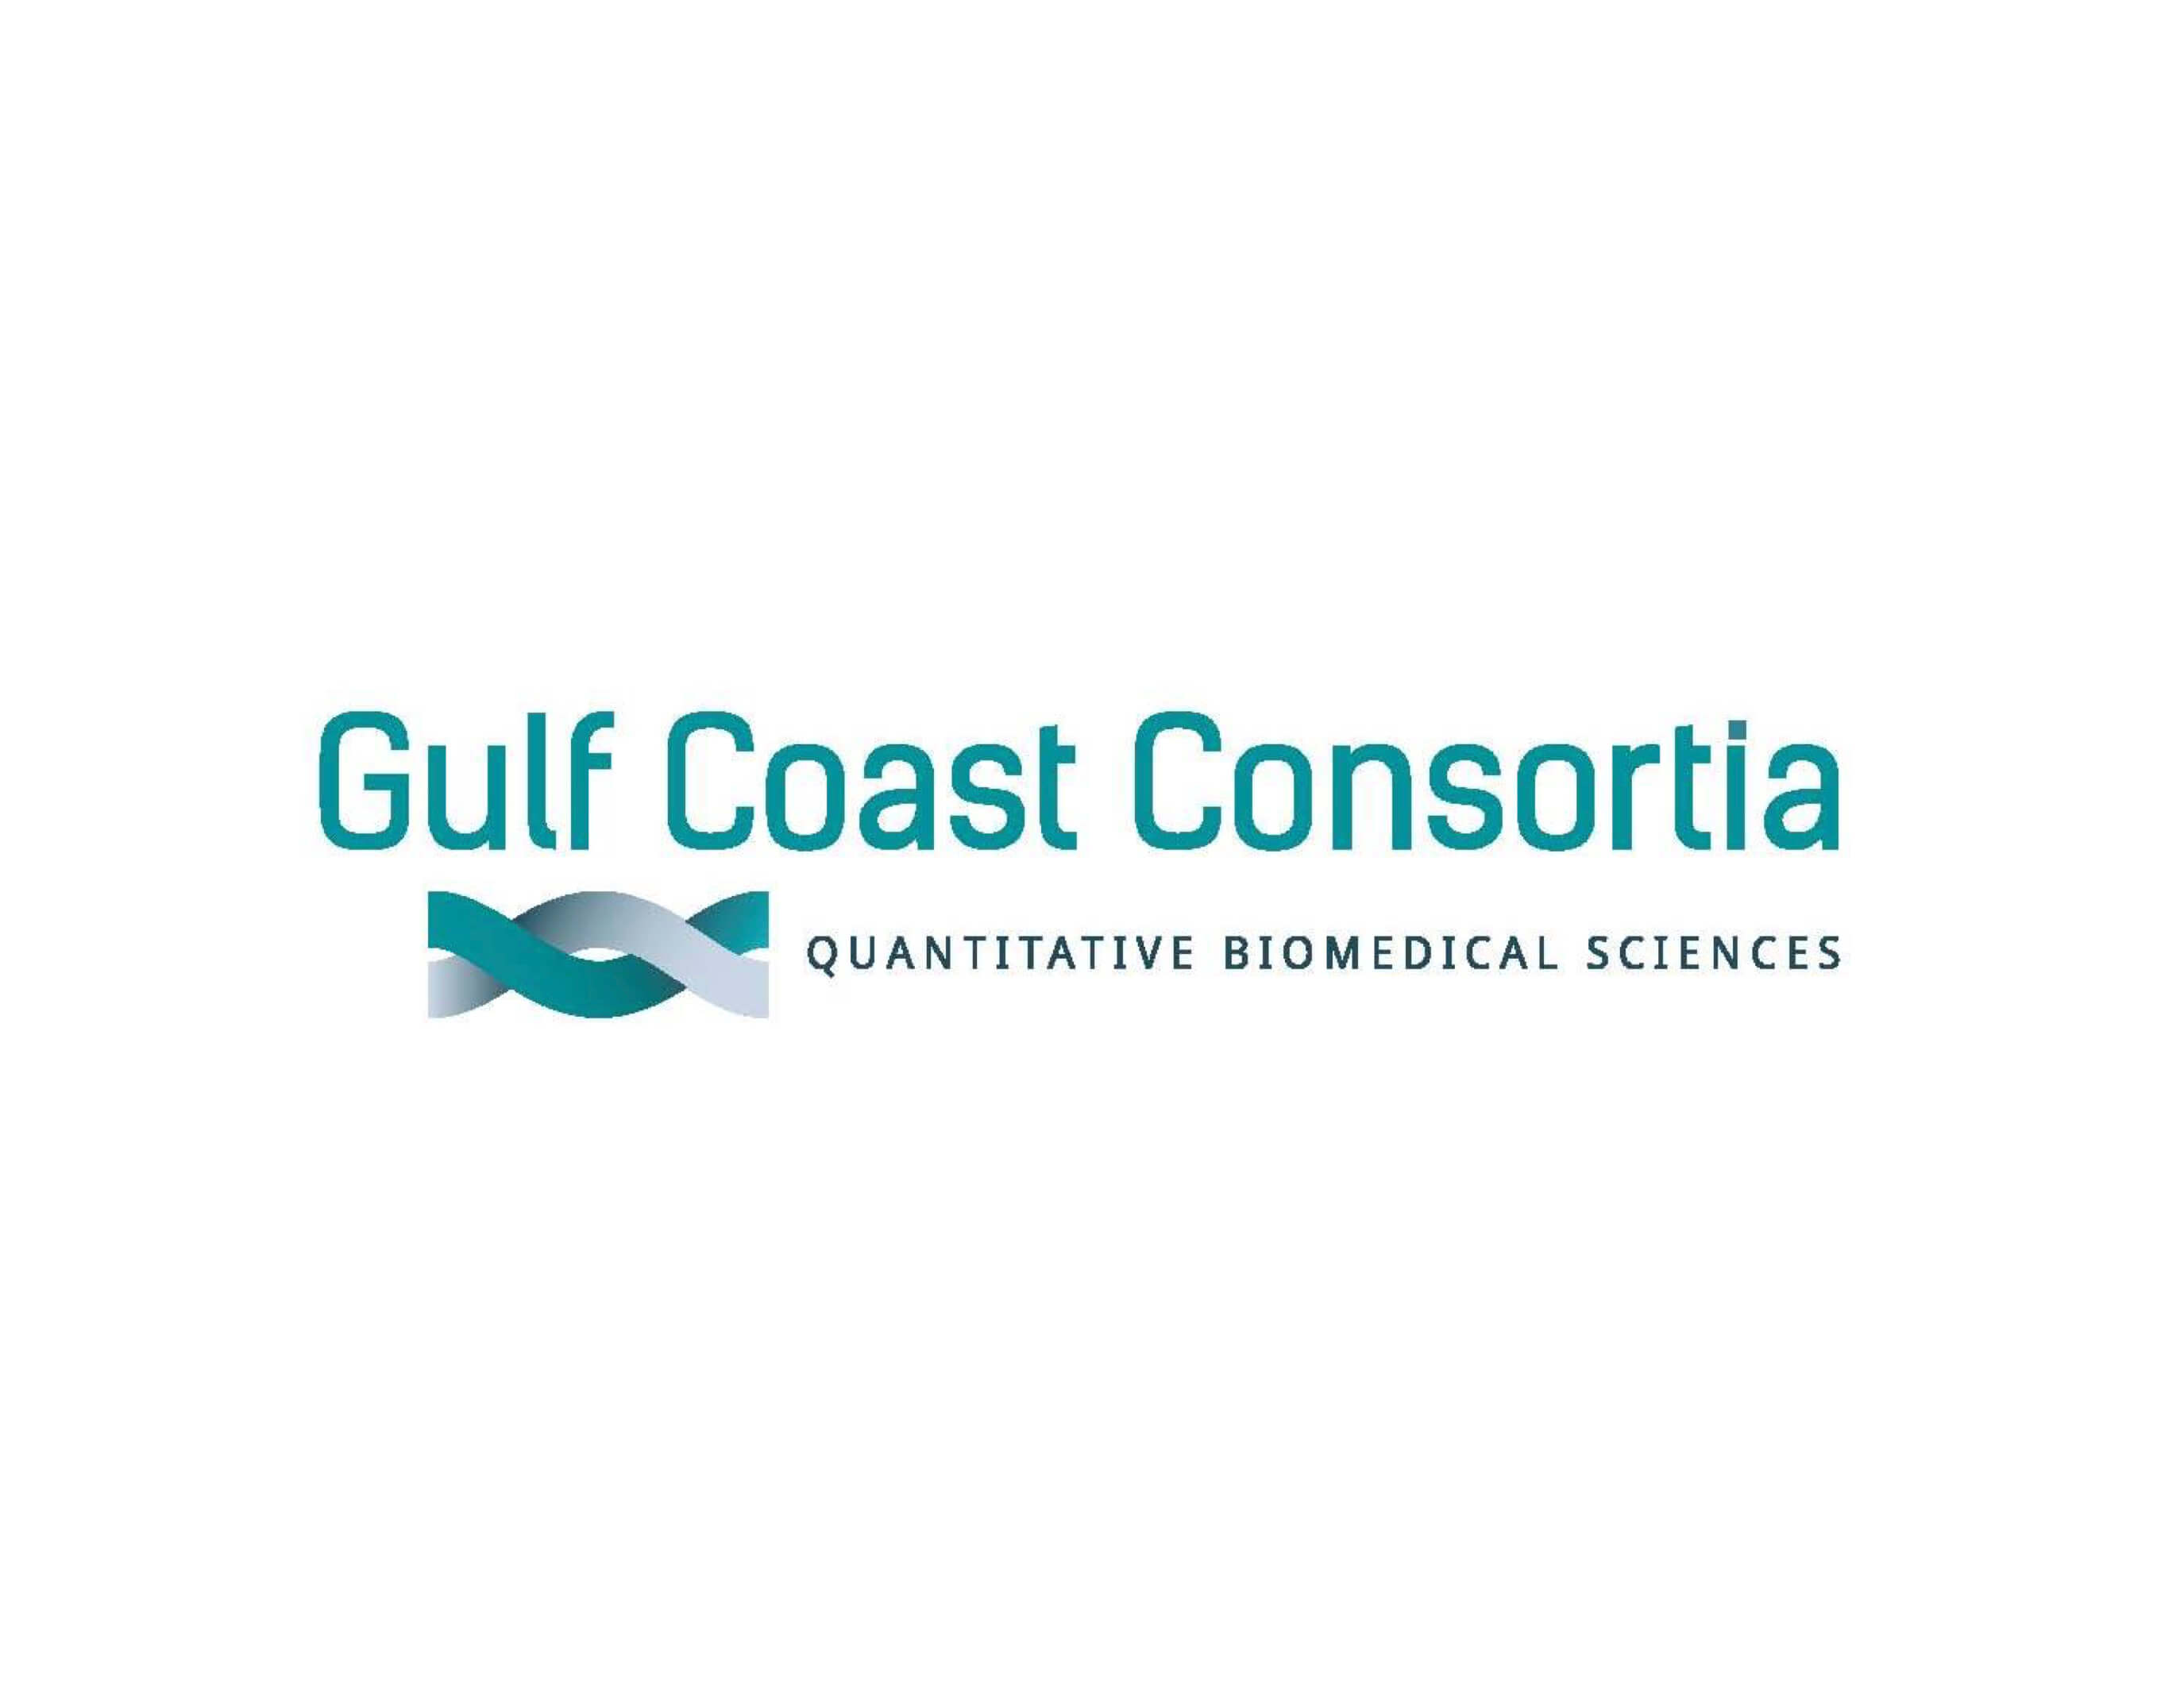 Gulf Coast Consortia logo